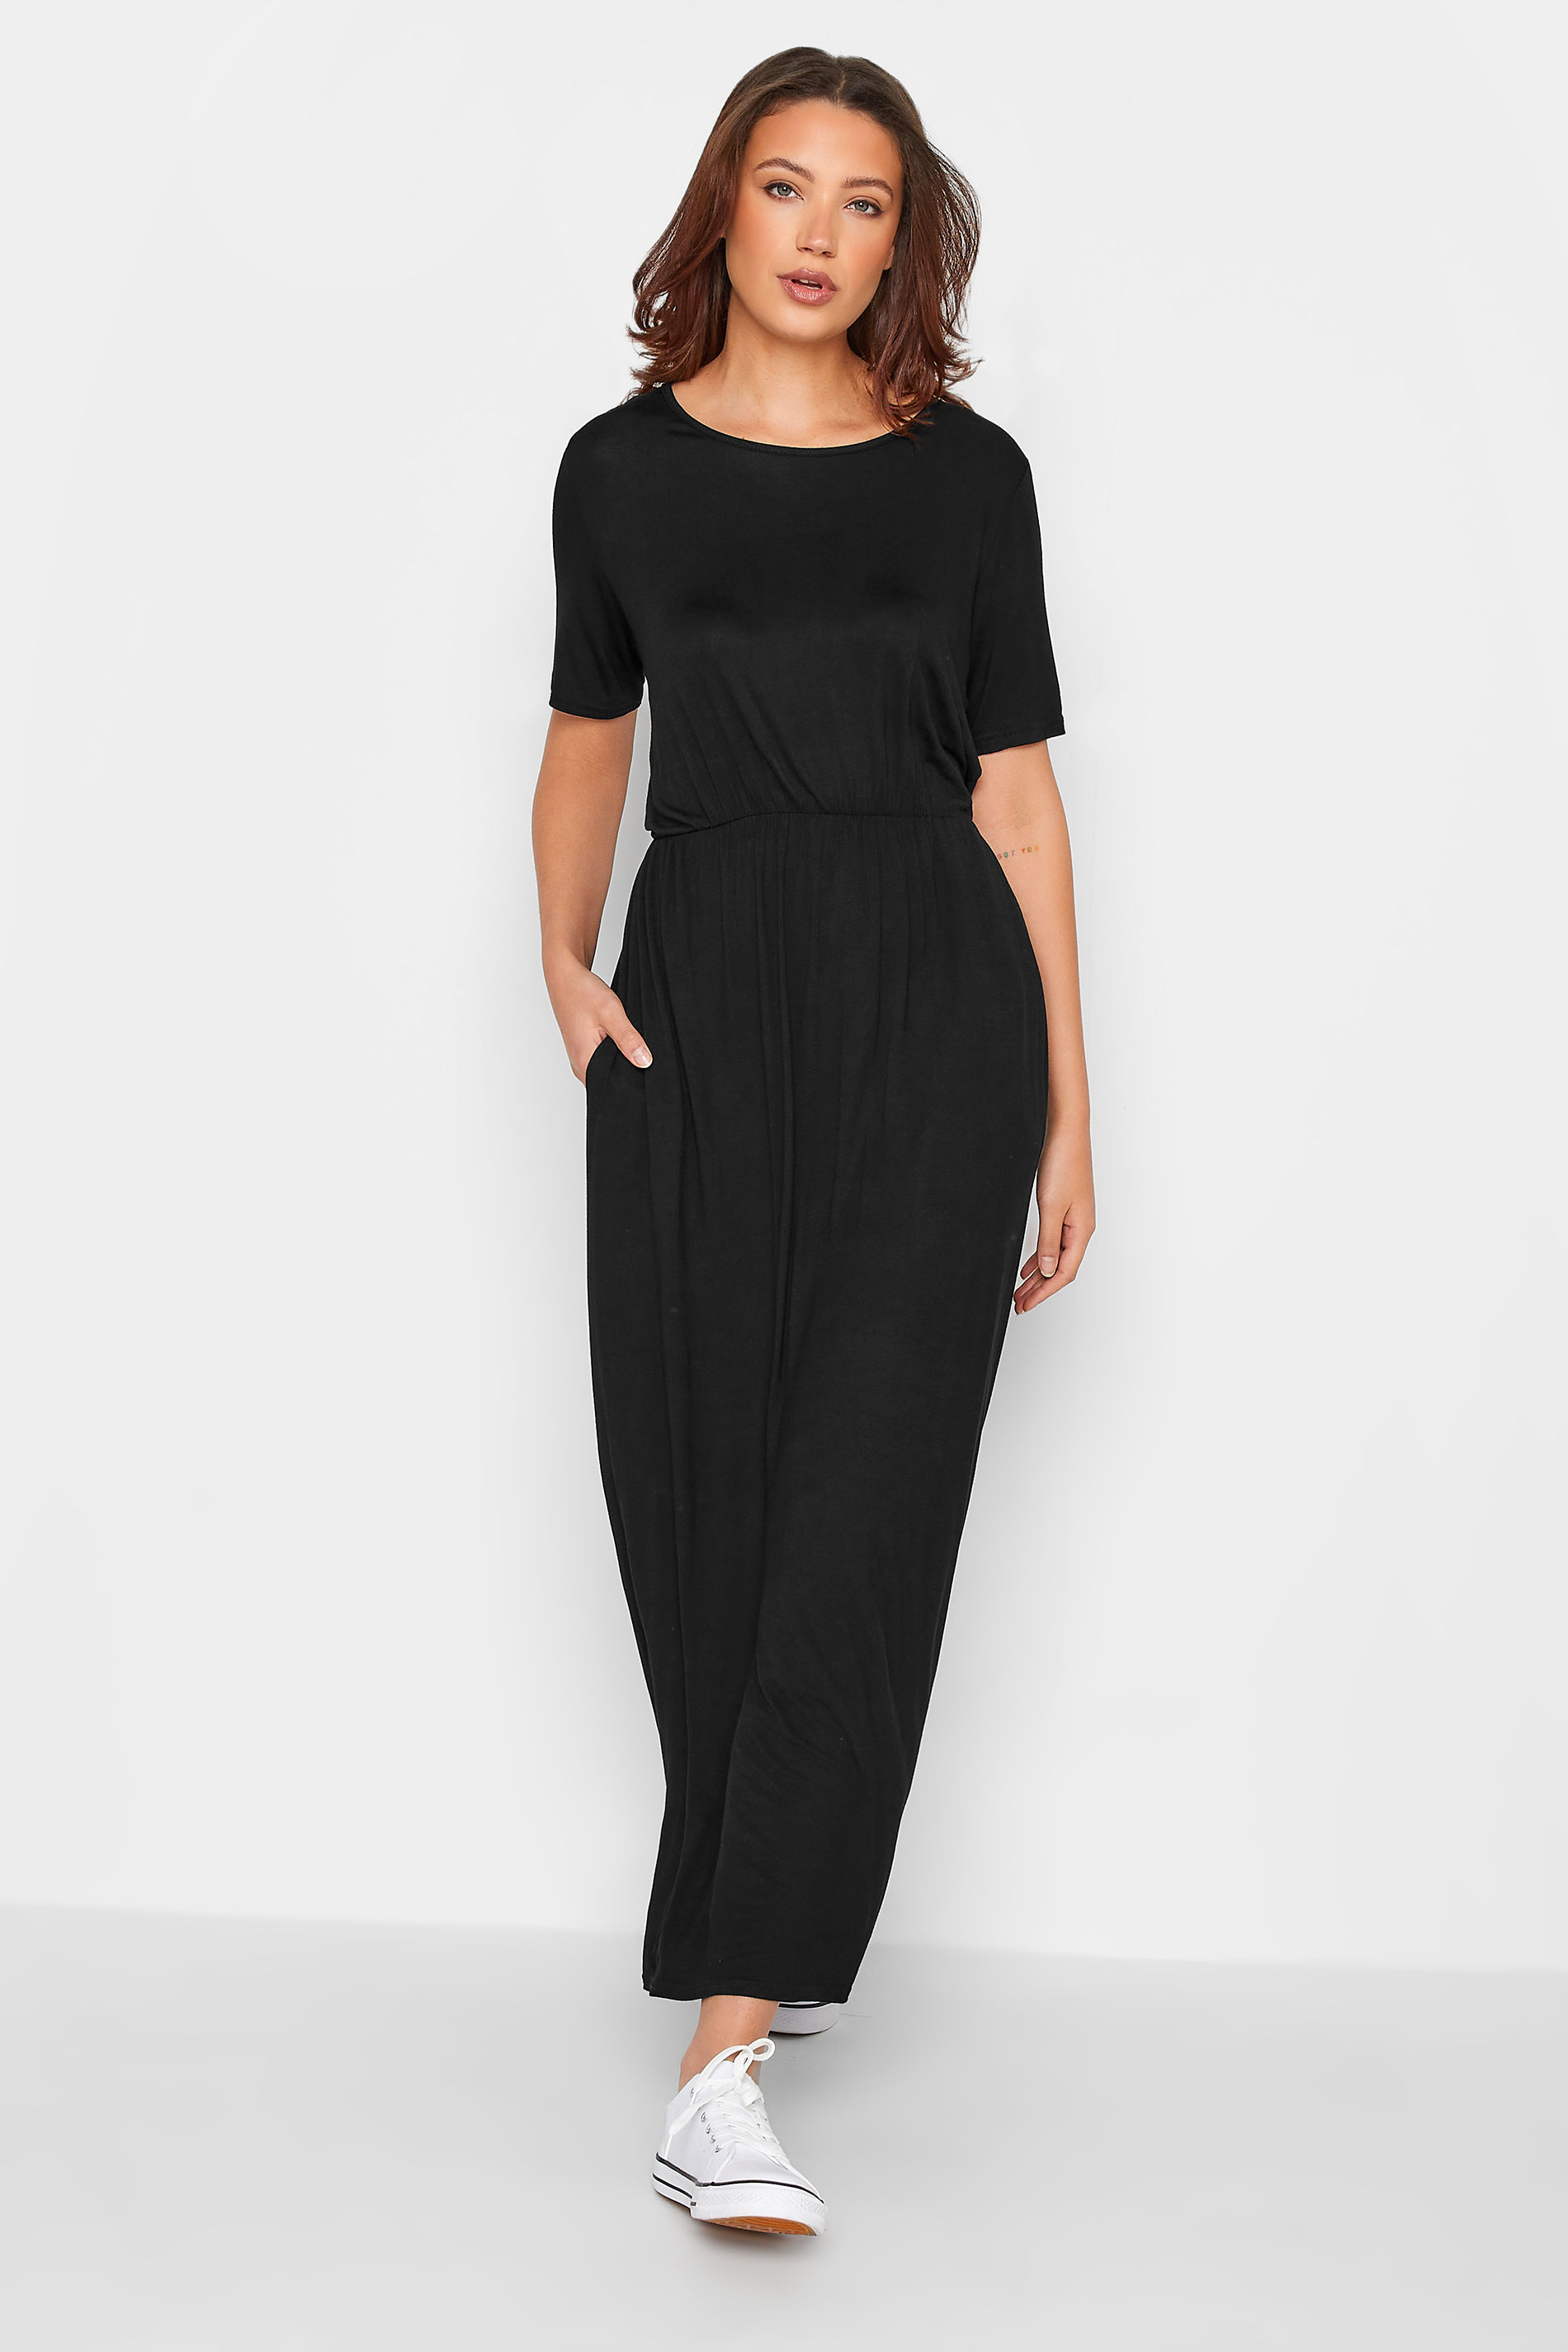 LTS Black Pocket Midaxi Dress | Long Tall Sally 1